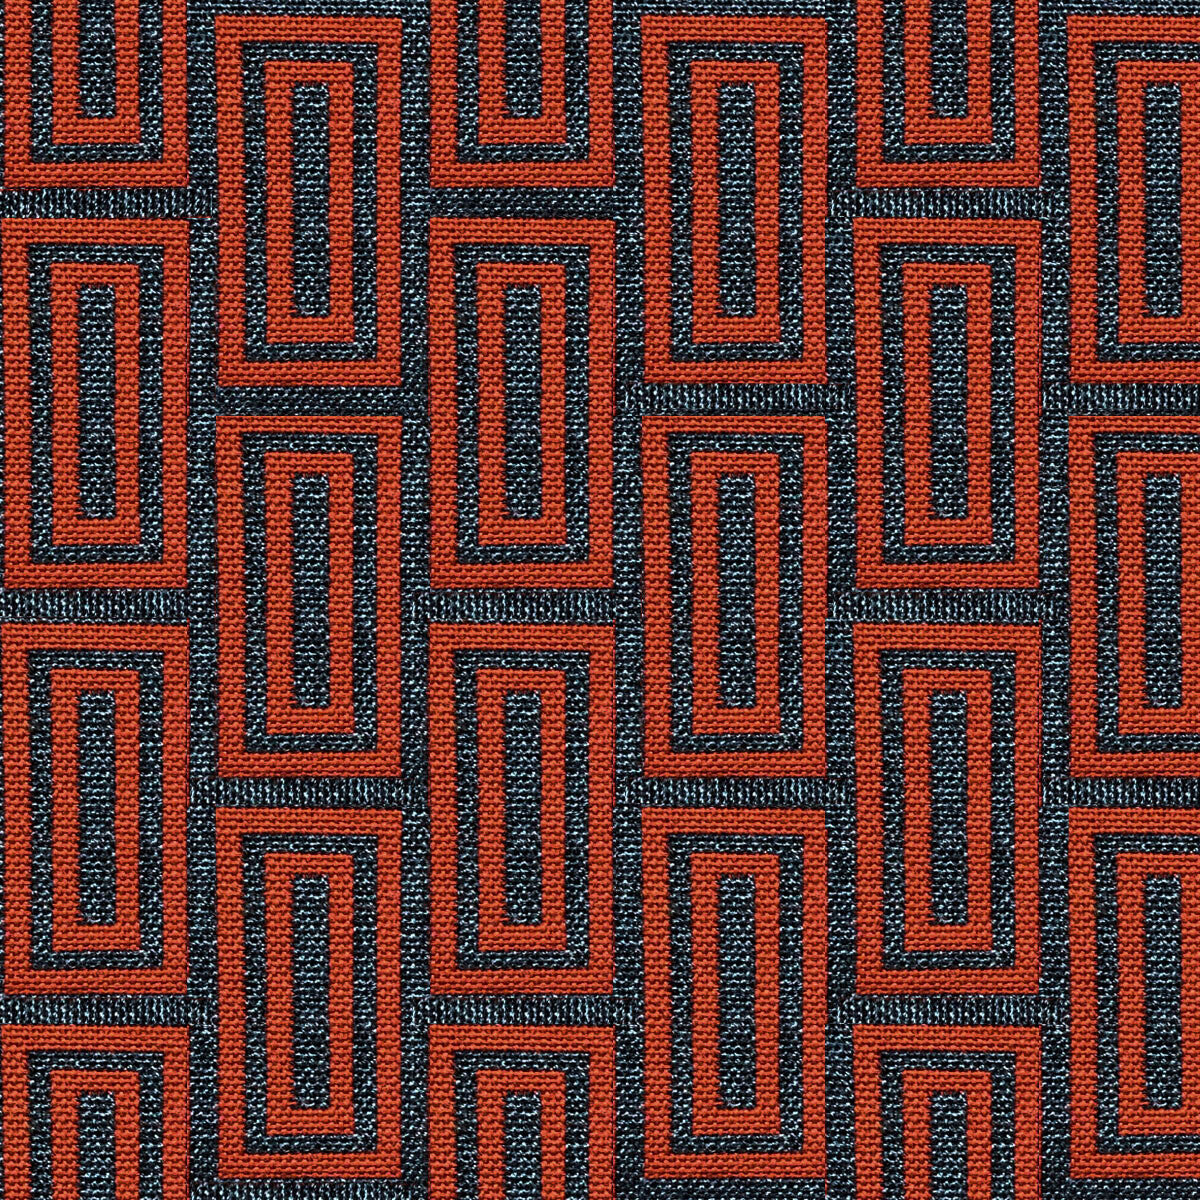 Caleb fabric in gris/rojo color - pattern LCT1056.002.0 - by Gaston y Daniela in the Lorenzo Castillo VI collection